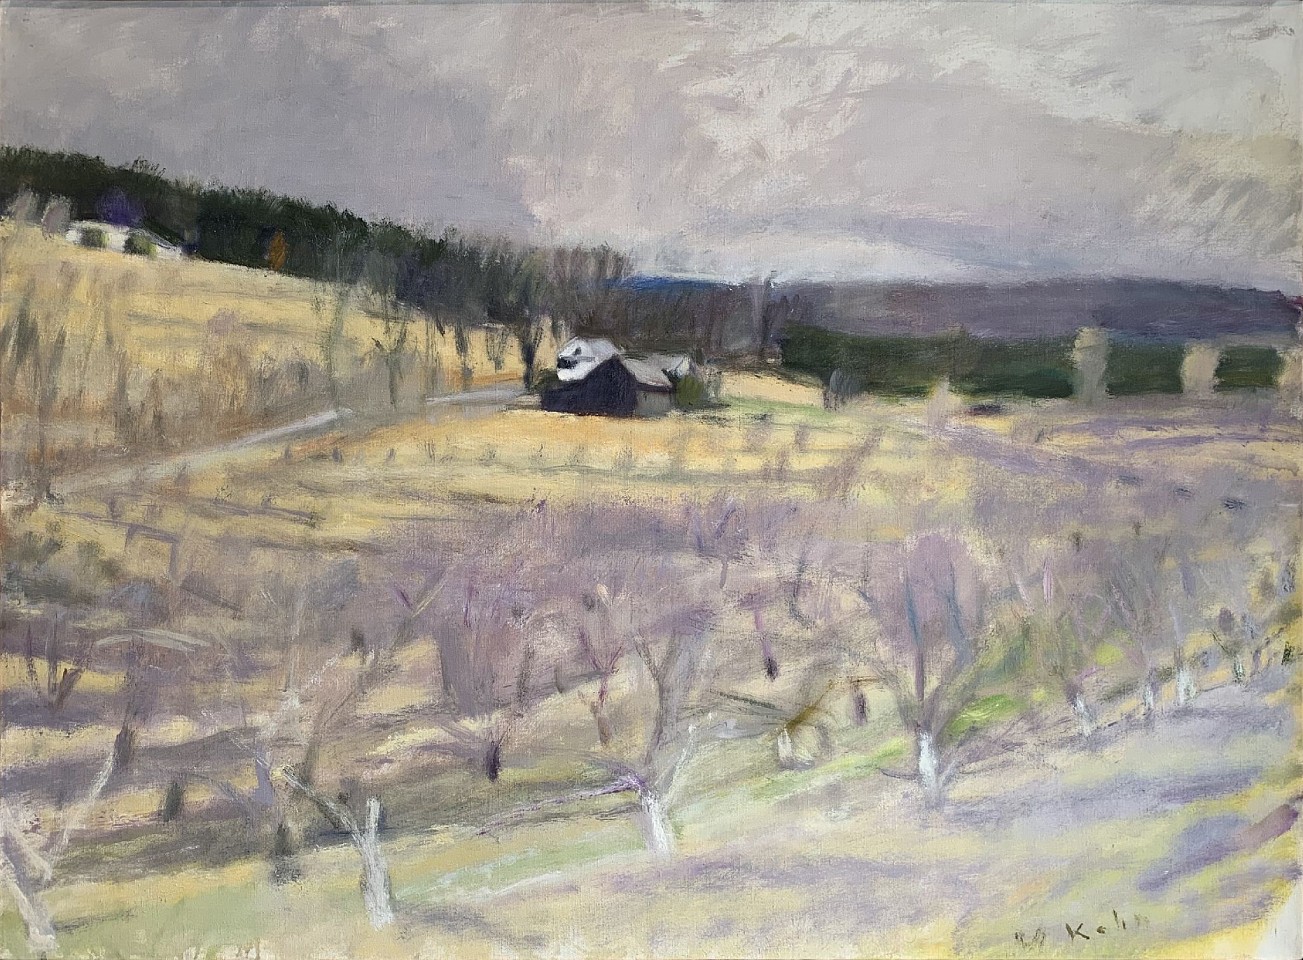 Wolf Kahn, Farm on a Hillside, 1978
oil on canvas, 28 x 38 in. (71.1 x 96.5 cm)
WK201201